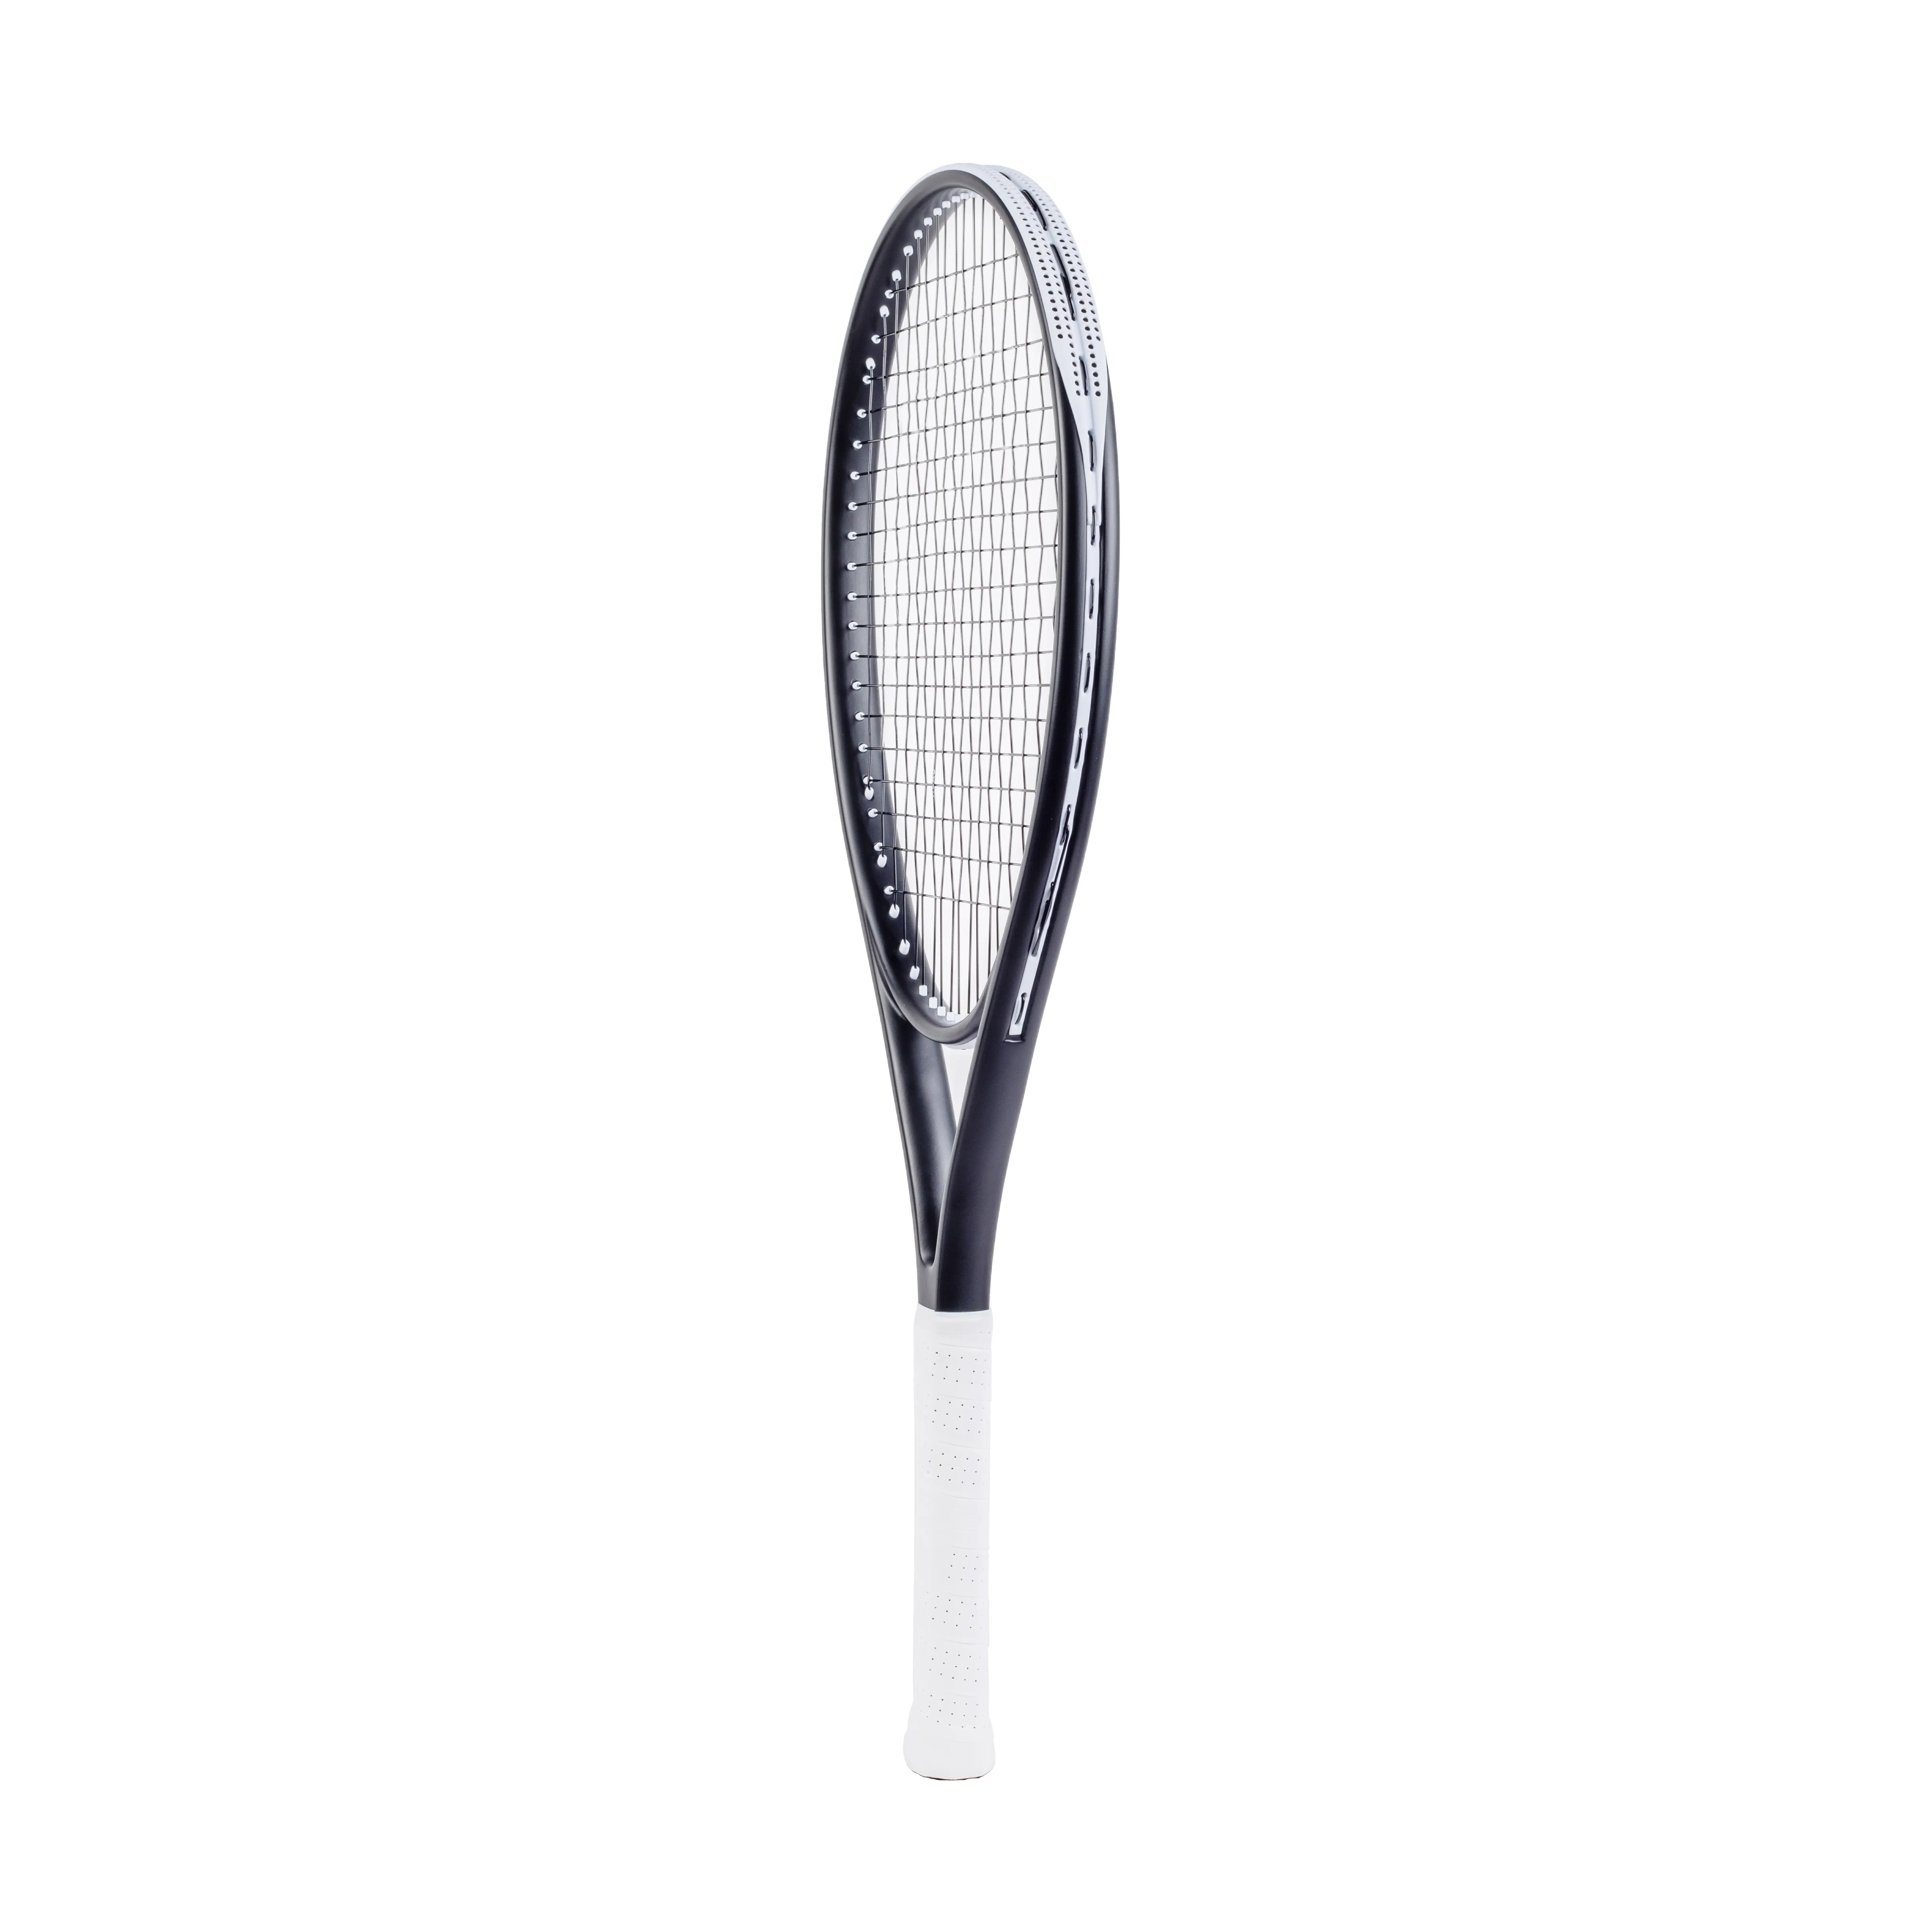 Hot Selling High-End Hochwertige maßge schneiderte echte Toray Carbon Faser Tennis schläger Schläger 25 Zoll 26 Zoll 27 Zoll